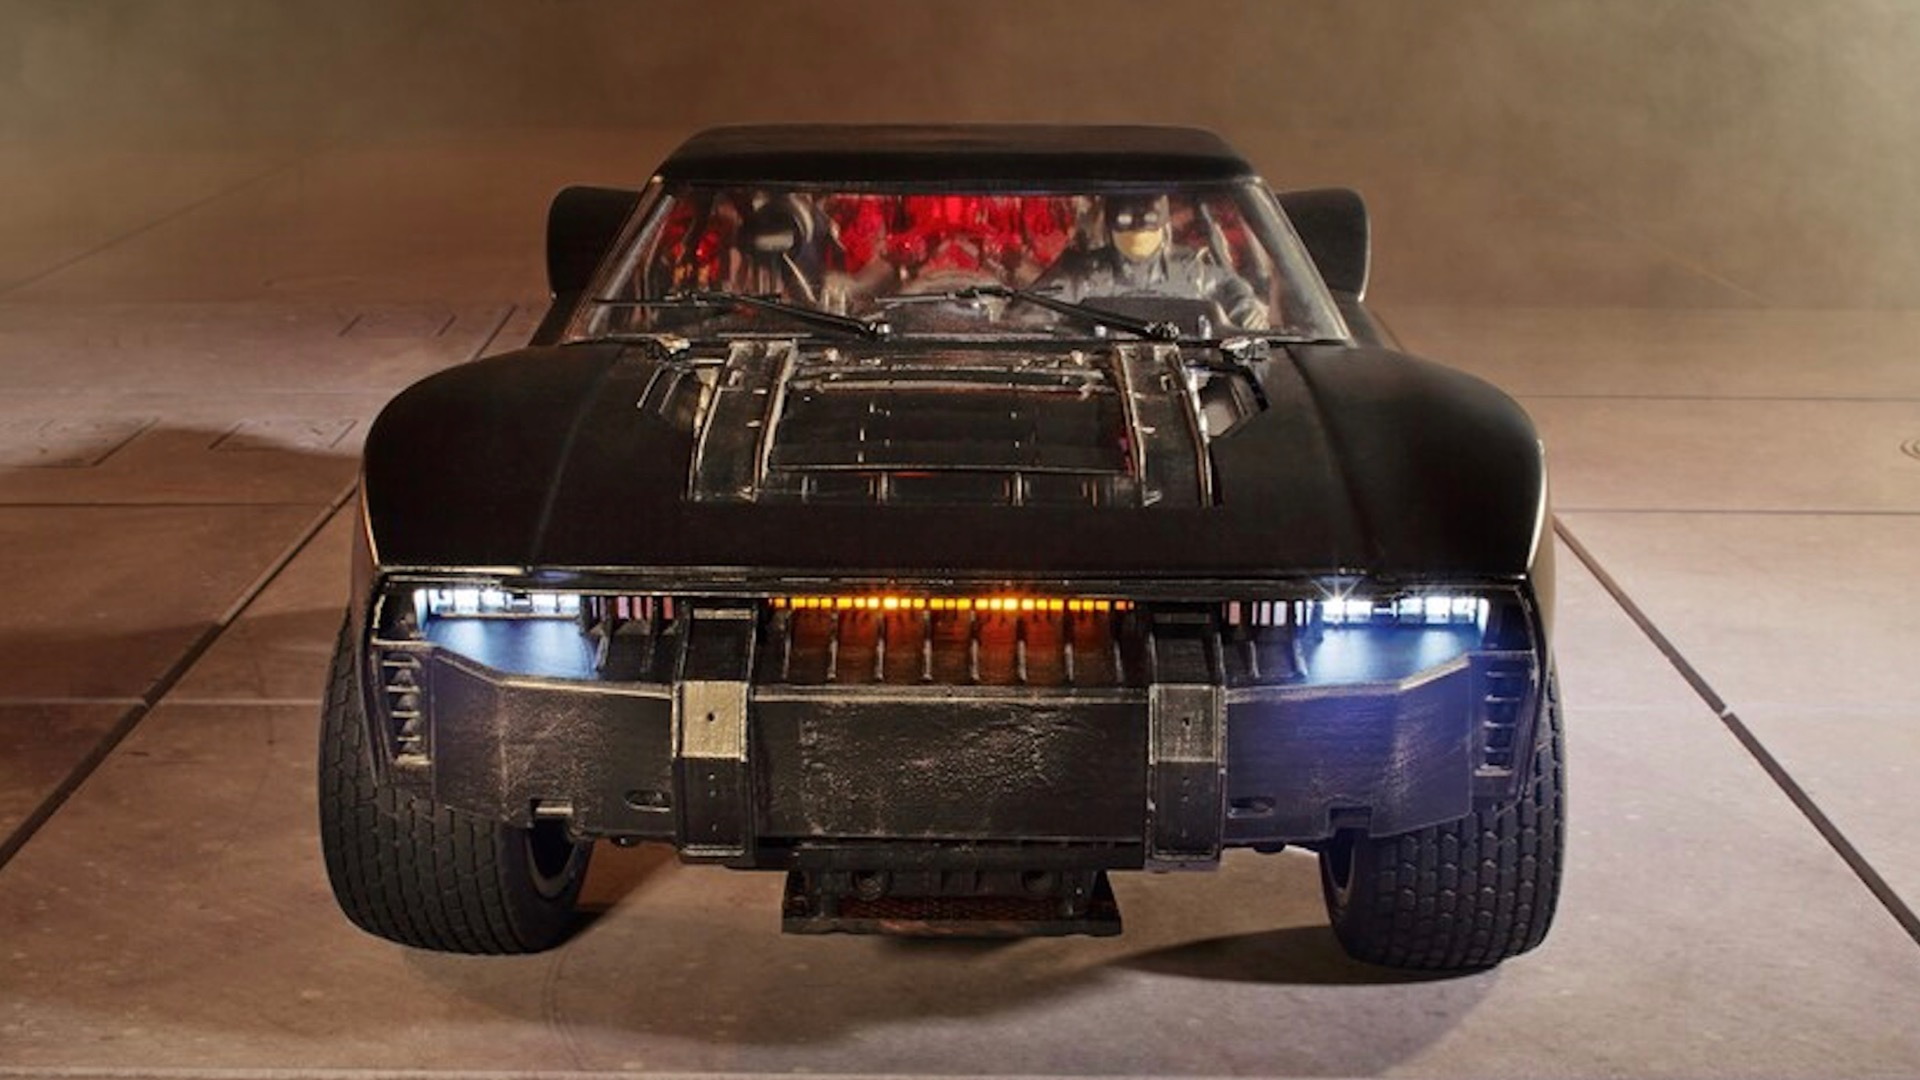 "The Batman" Hot Wheels RC Batmobile